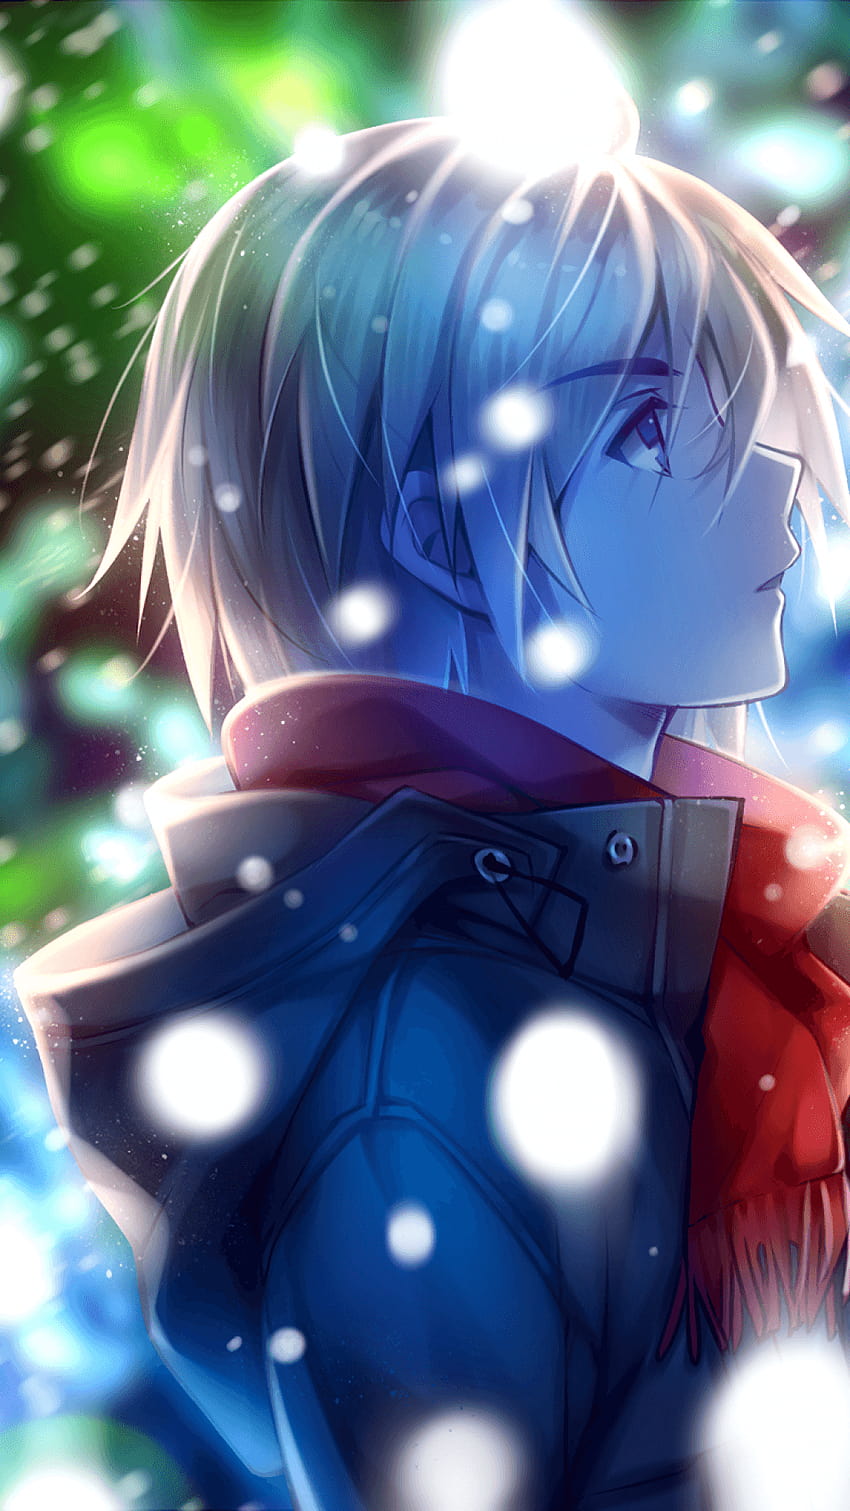 1080x1920 Anime Boy, Tampilan Profil, Syal Merah, Musim Dingin, Salju, anak laki-laki anime lucu wallpaper ponsel HD